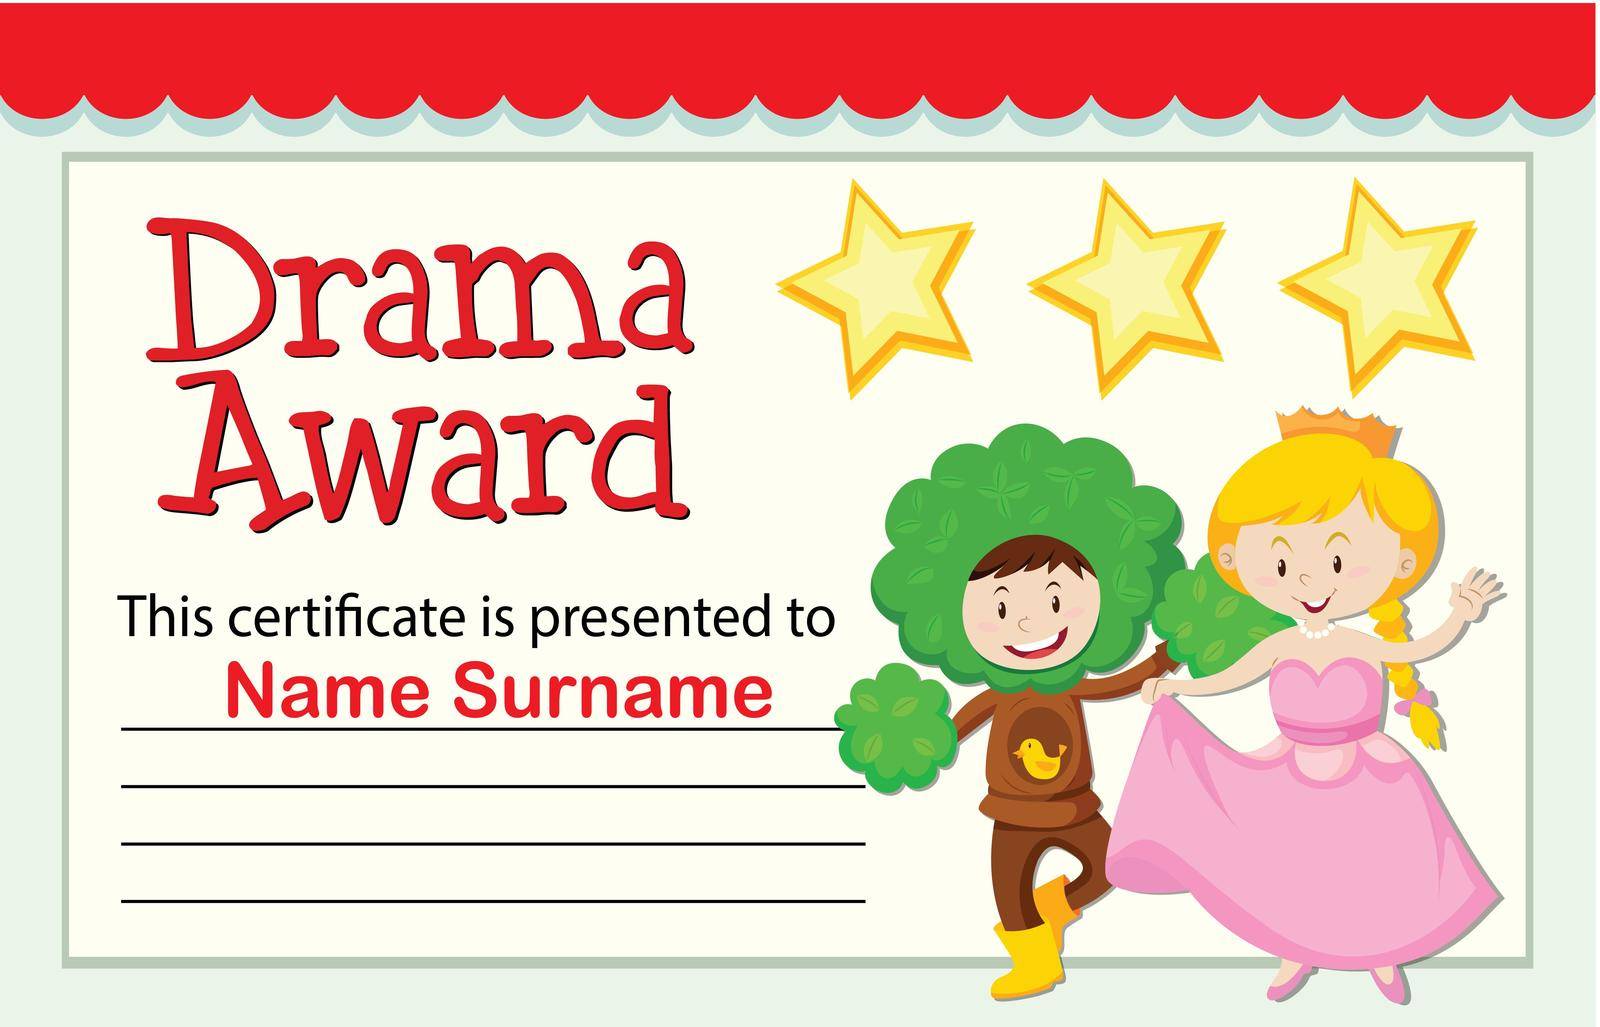 A drama award certificate illustration